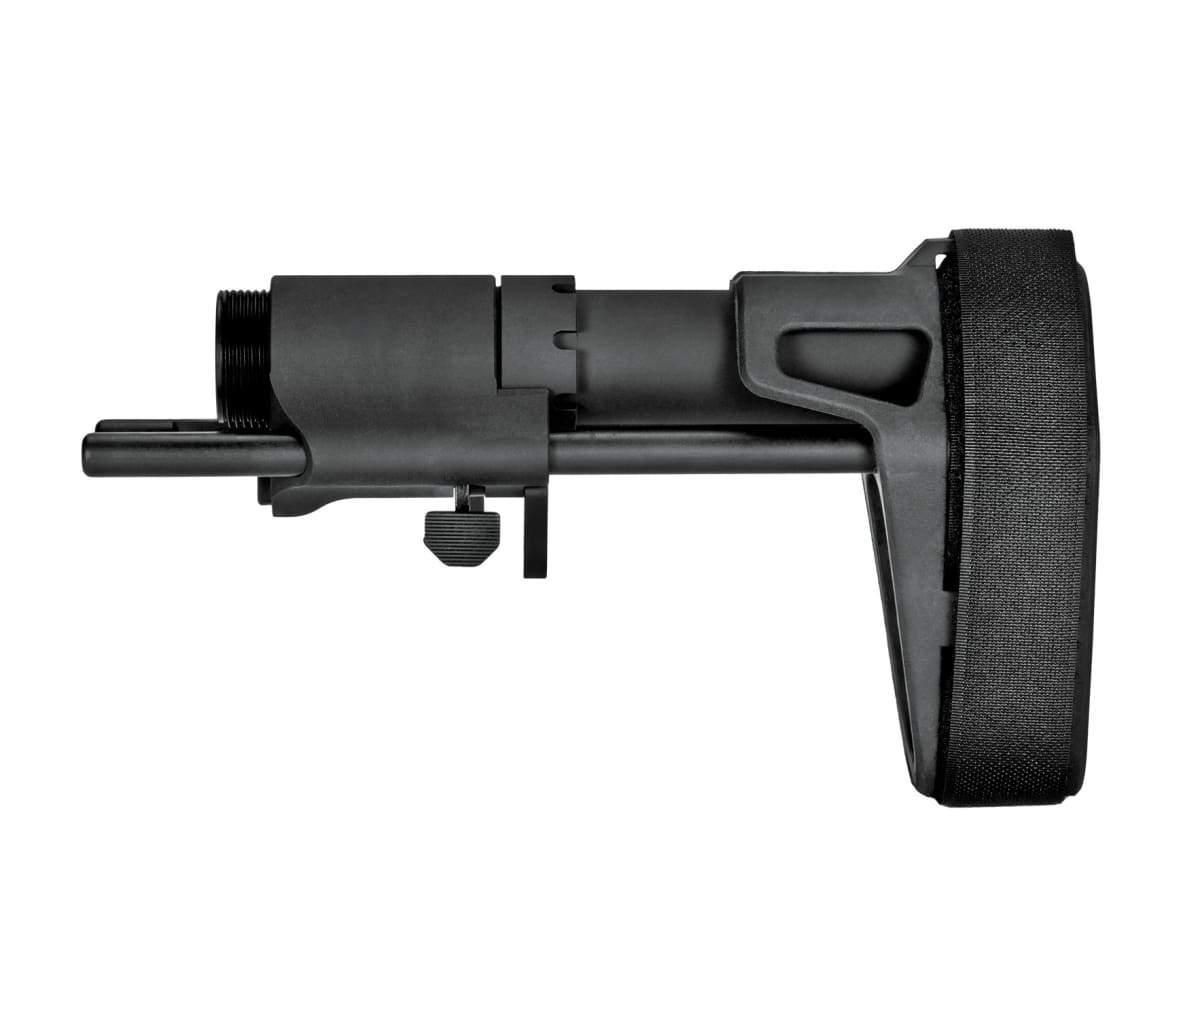 https://www.arbuildjunkie.com/wp-content/uploads/2021/05/sb-tactical-sbpdw-pistol-stabilizing-brace-ar-black-stock-ar15discounts_288.jpg.optimal.jpg